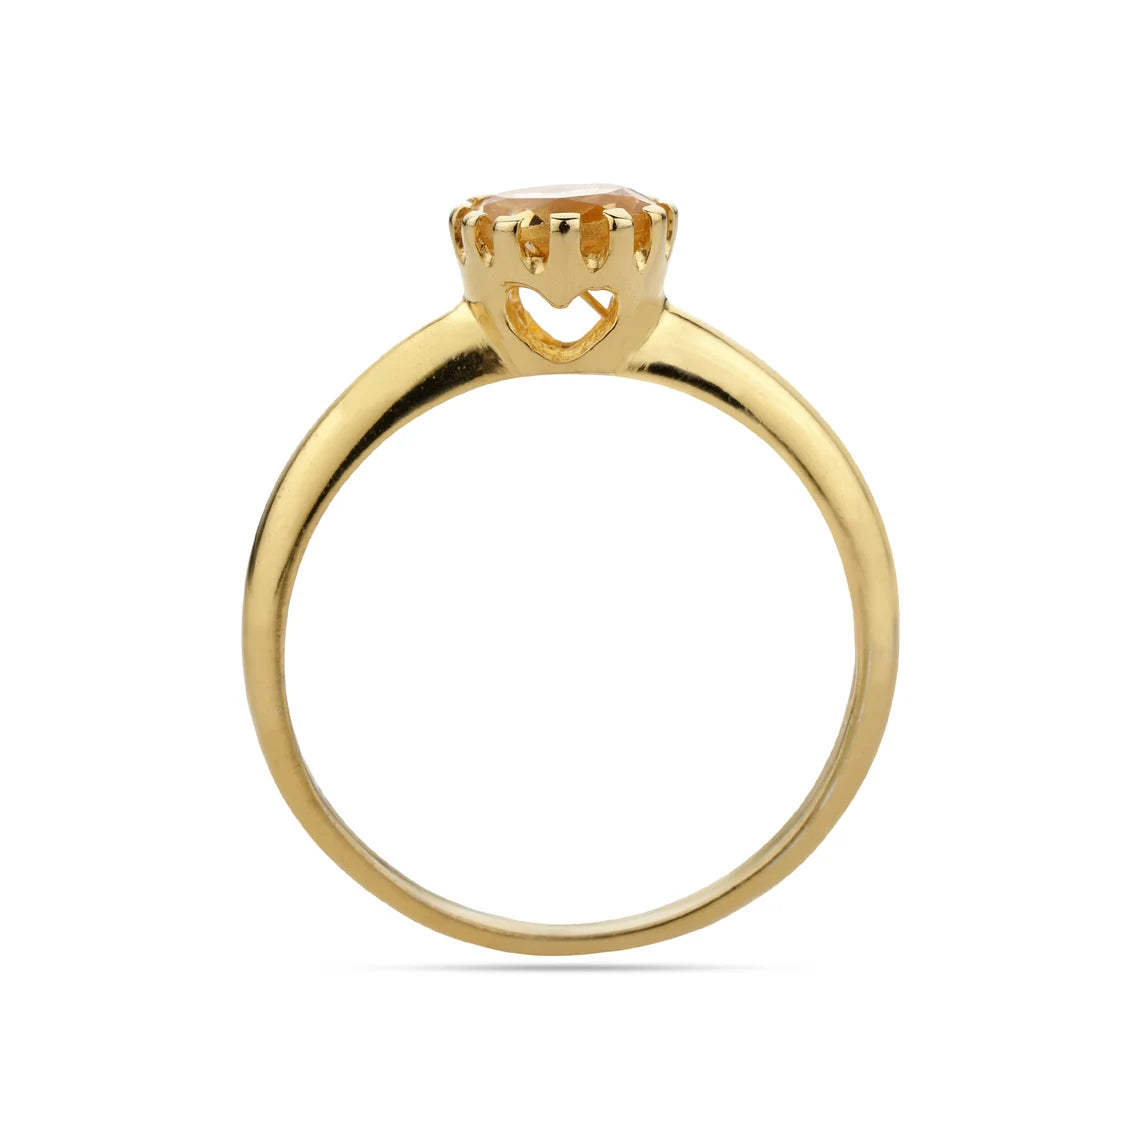 Natural Citrine Gold Ring, Round Cut Citrine Ring, Citrine Gemstone Sterling Silver Ring, Citrine Birthstone Ring, Citrine Prong Ring